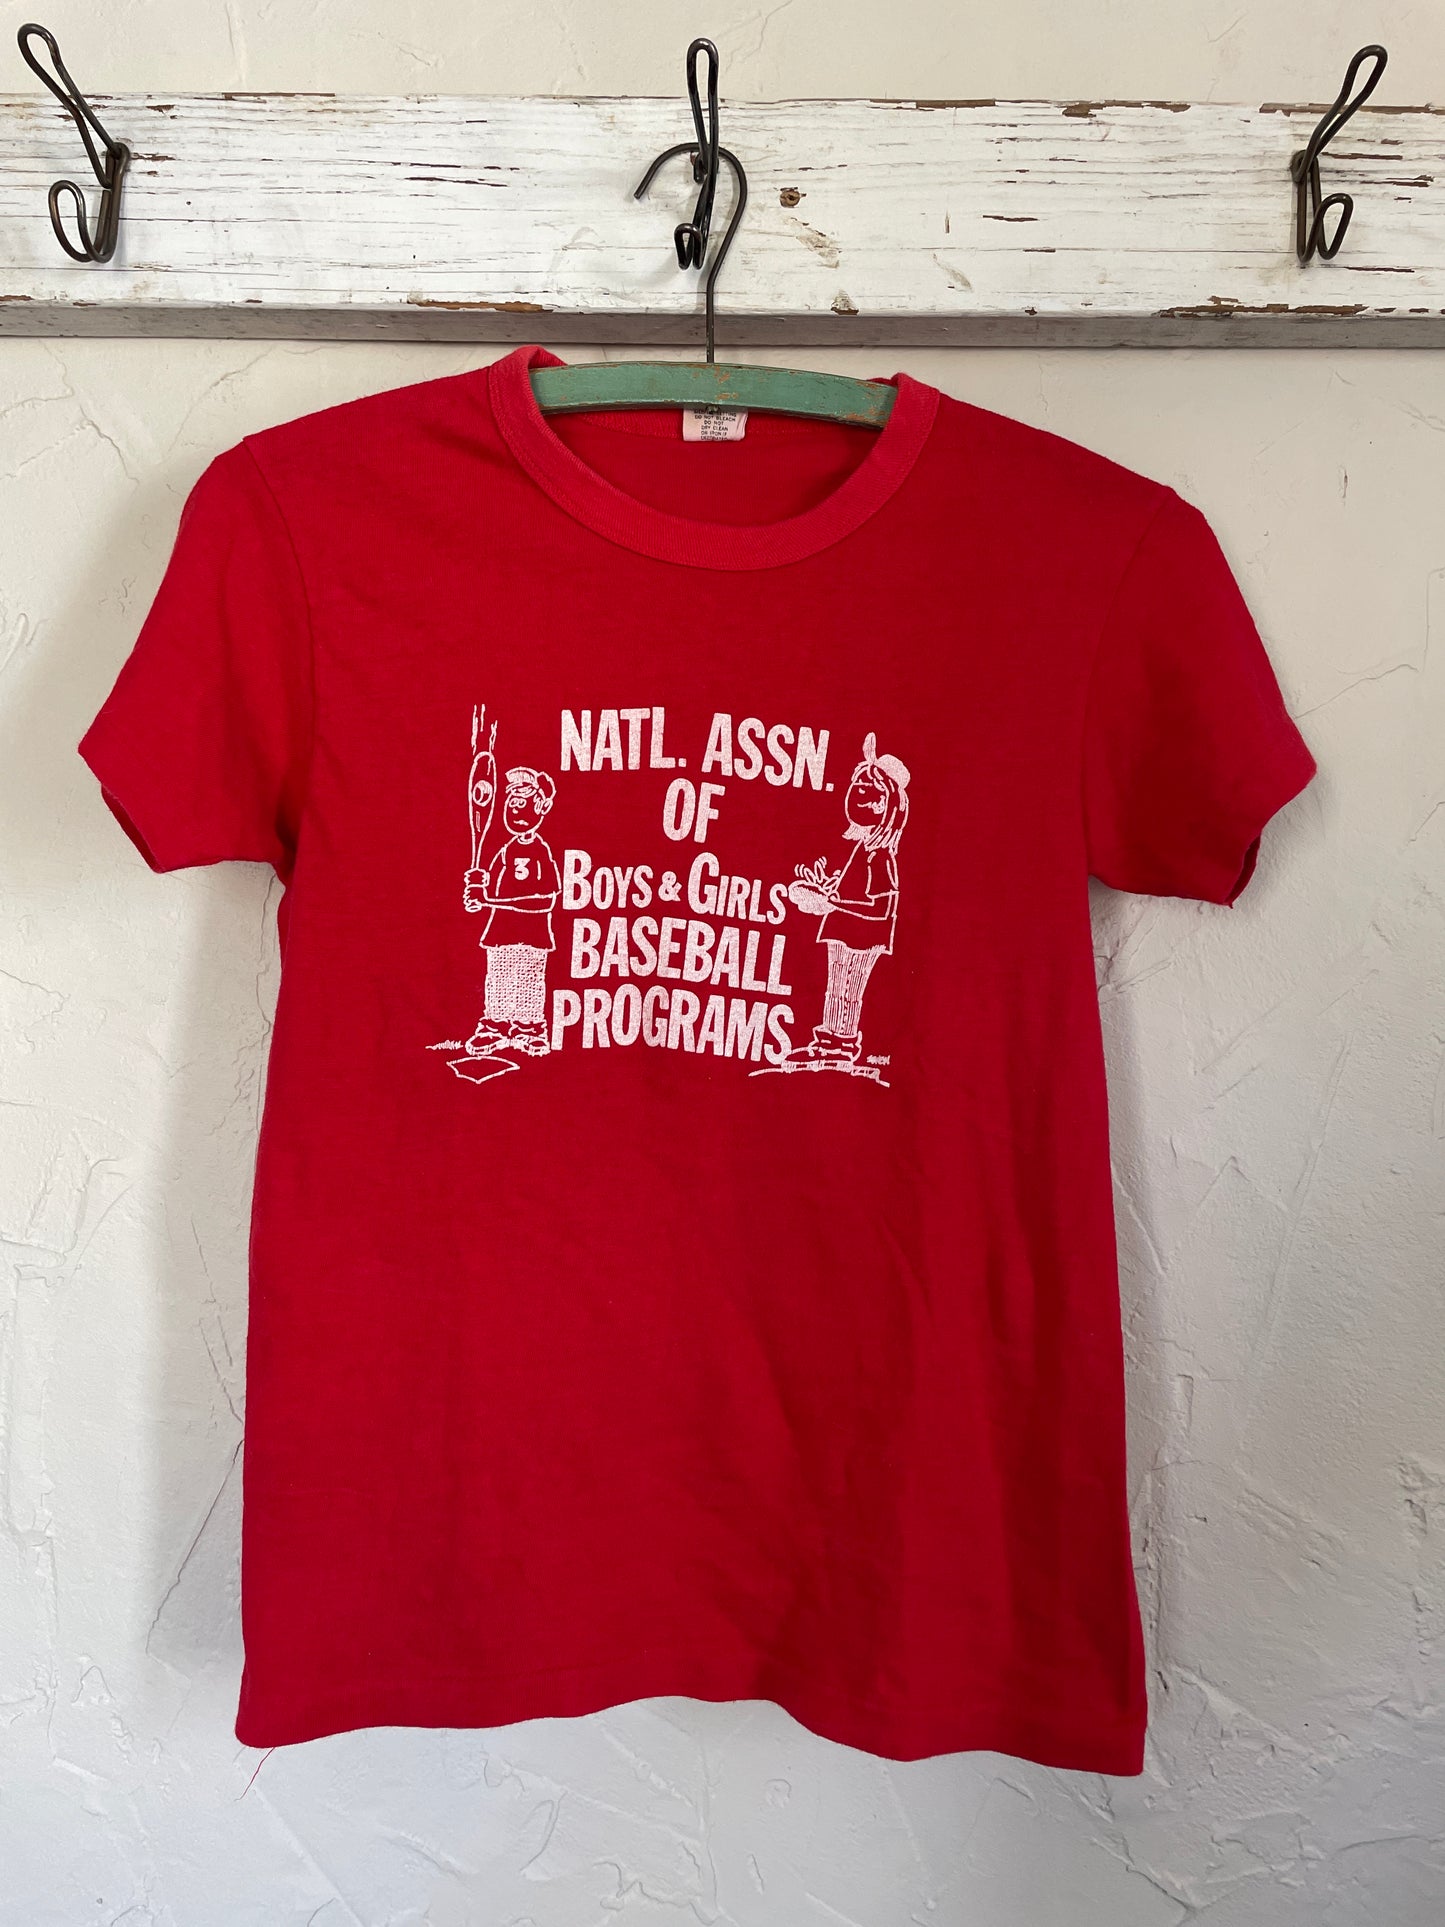 70s Natl. Assn. Of Boys & Girls Baseball Programs Tee